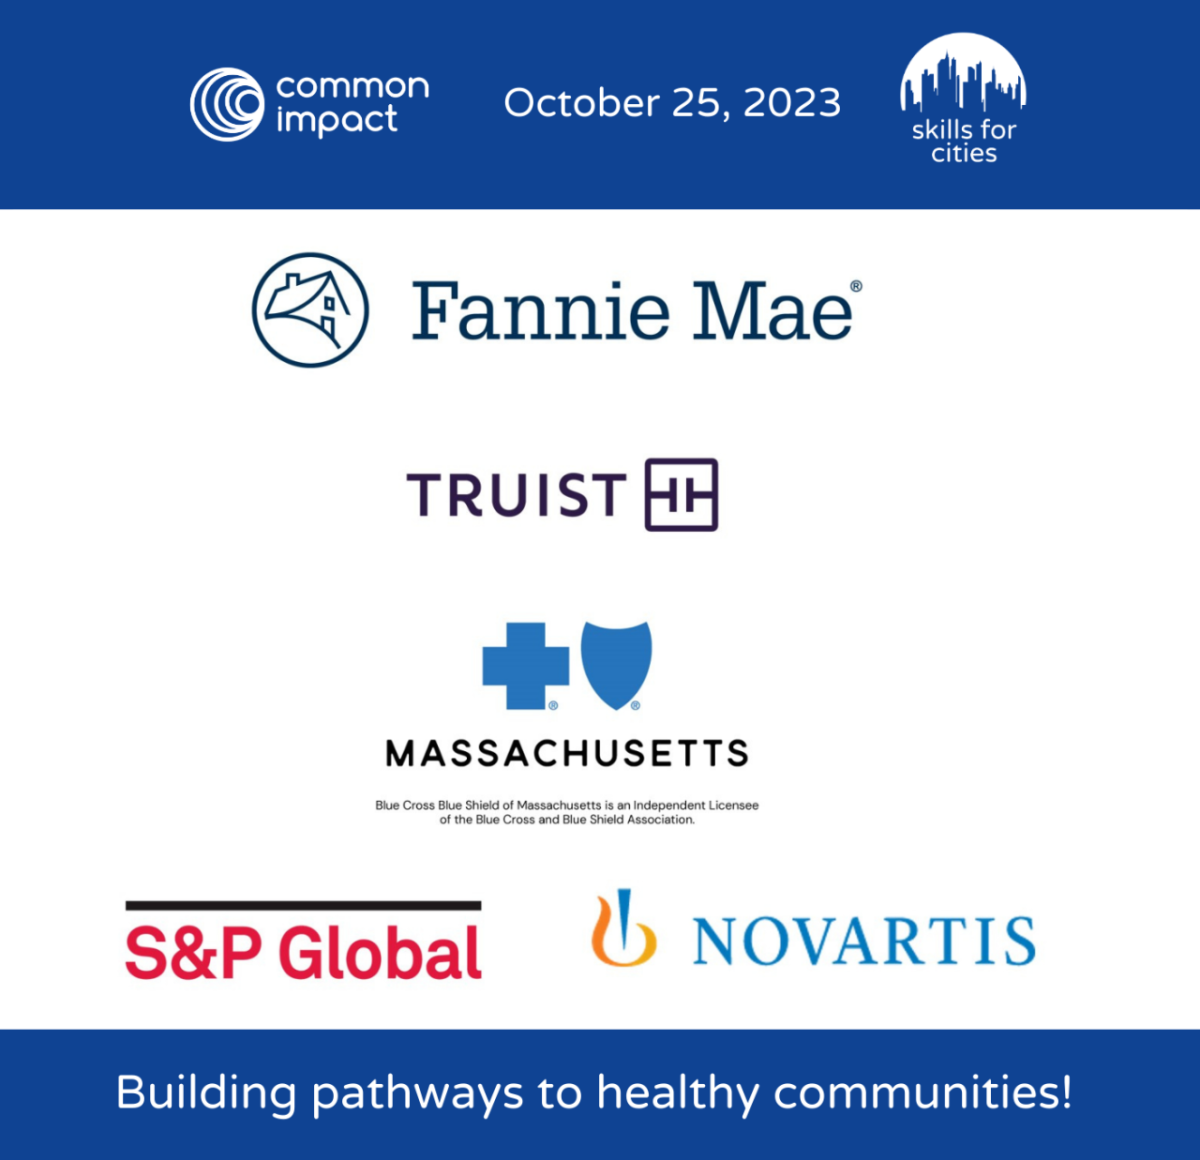 Skills for Cities Corporate Sponsor Logos: Fannie Mae, Truist, BCBSMA, S&P Global, and Novartis